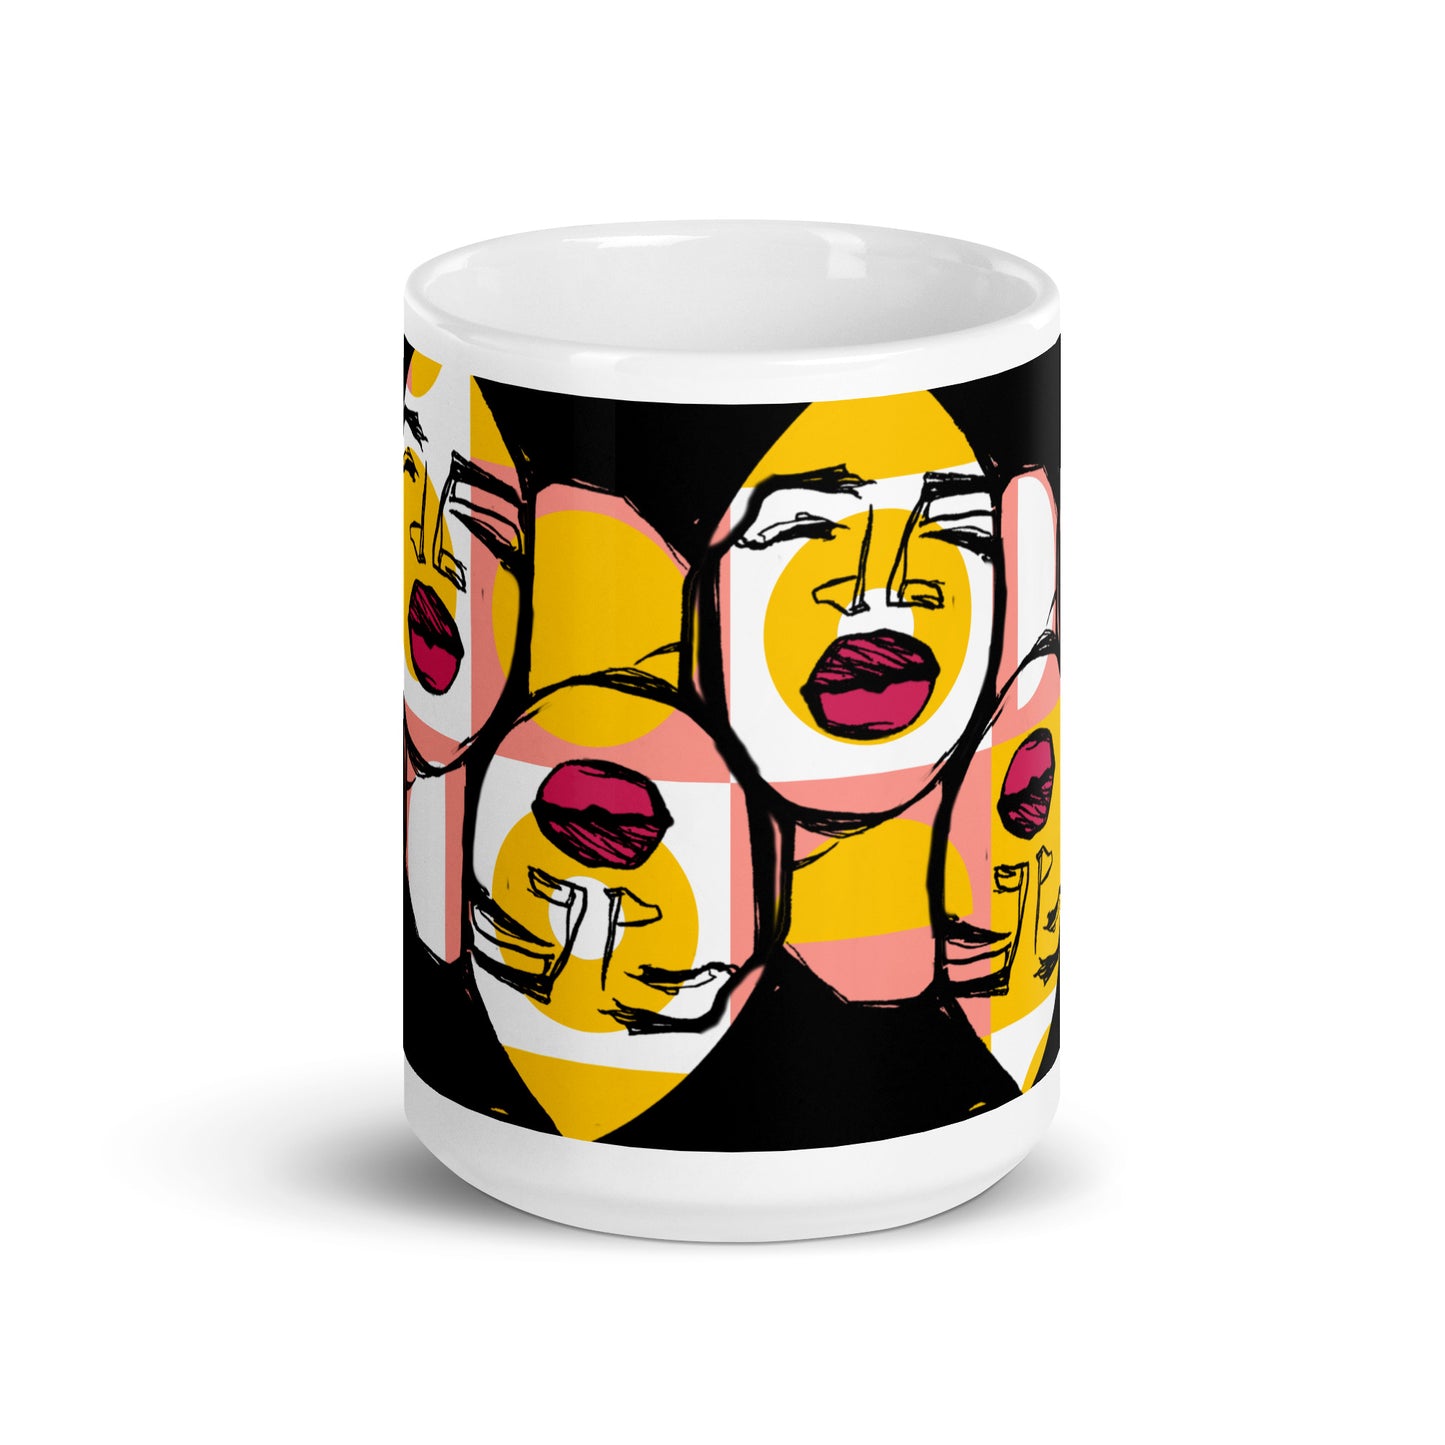 Lips glossy mug